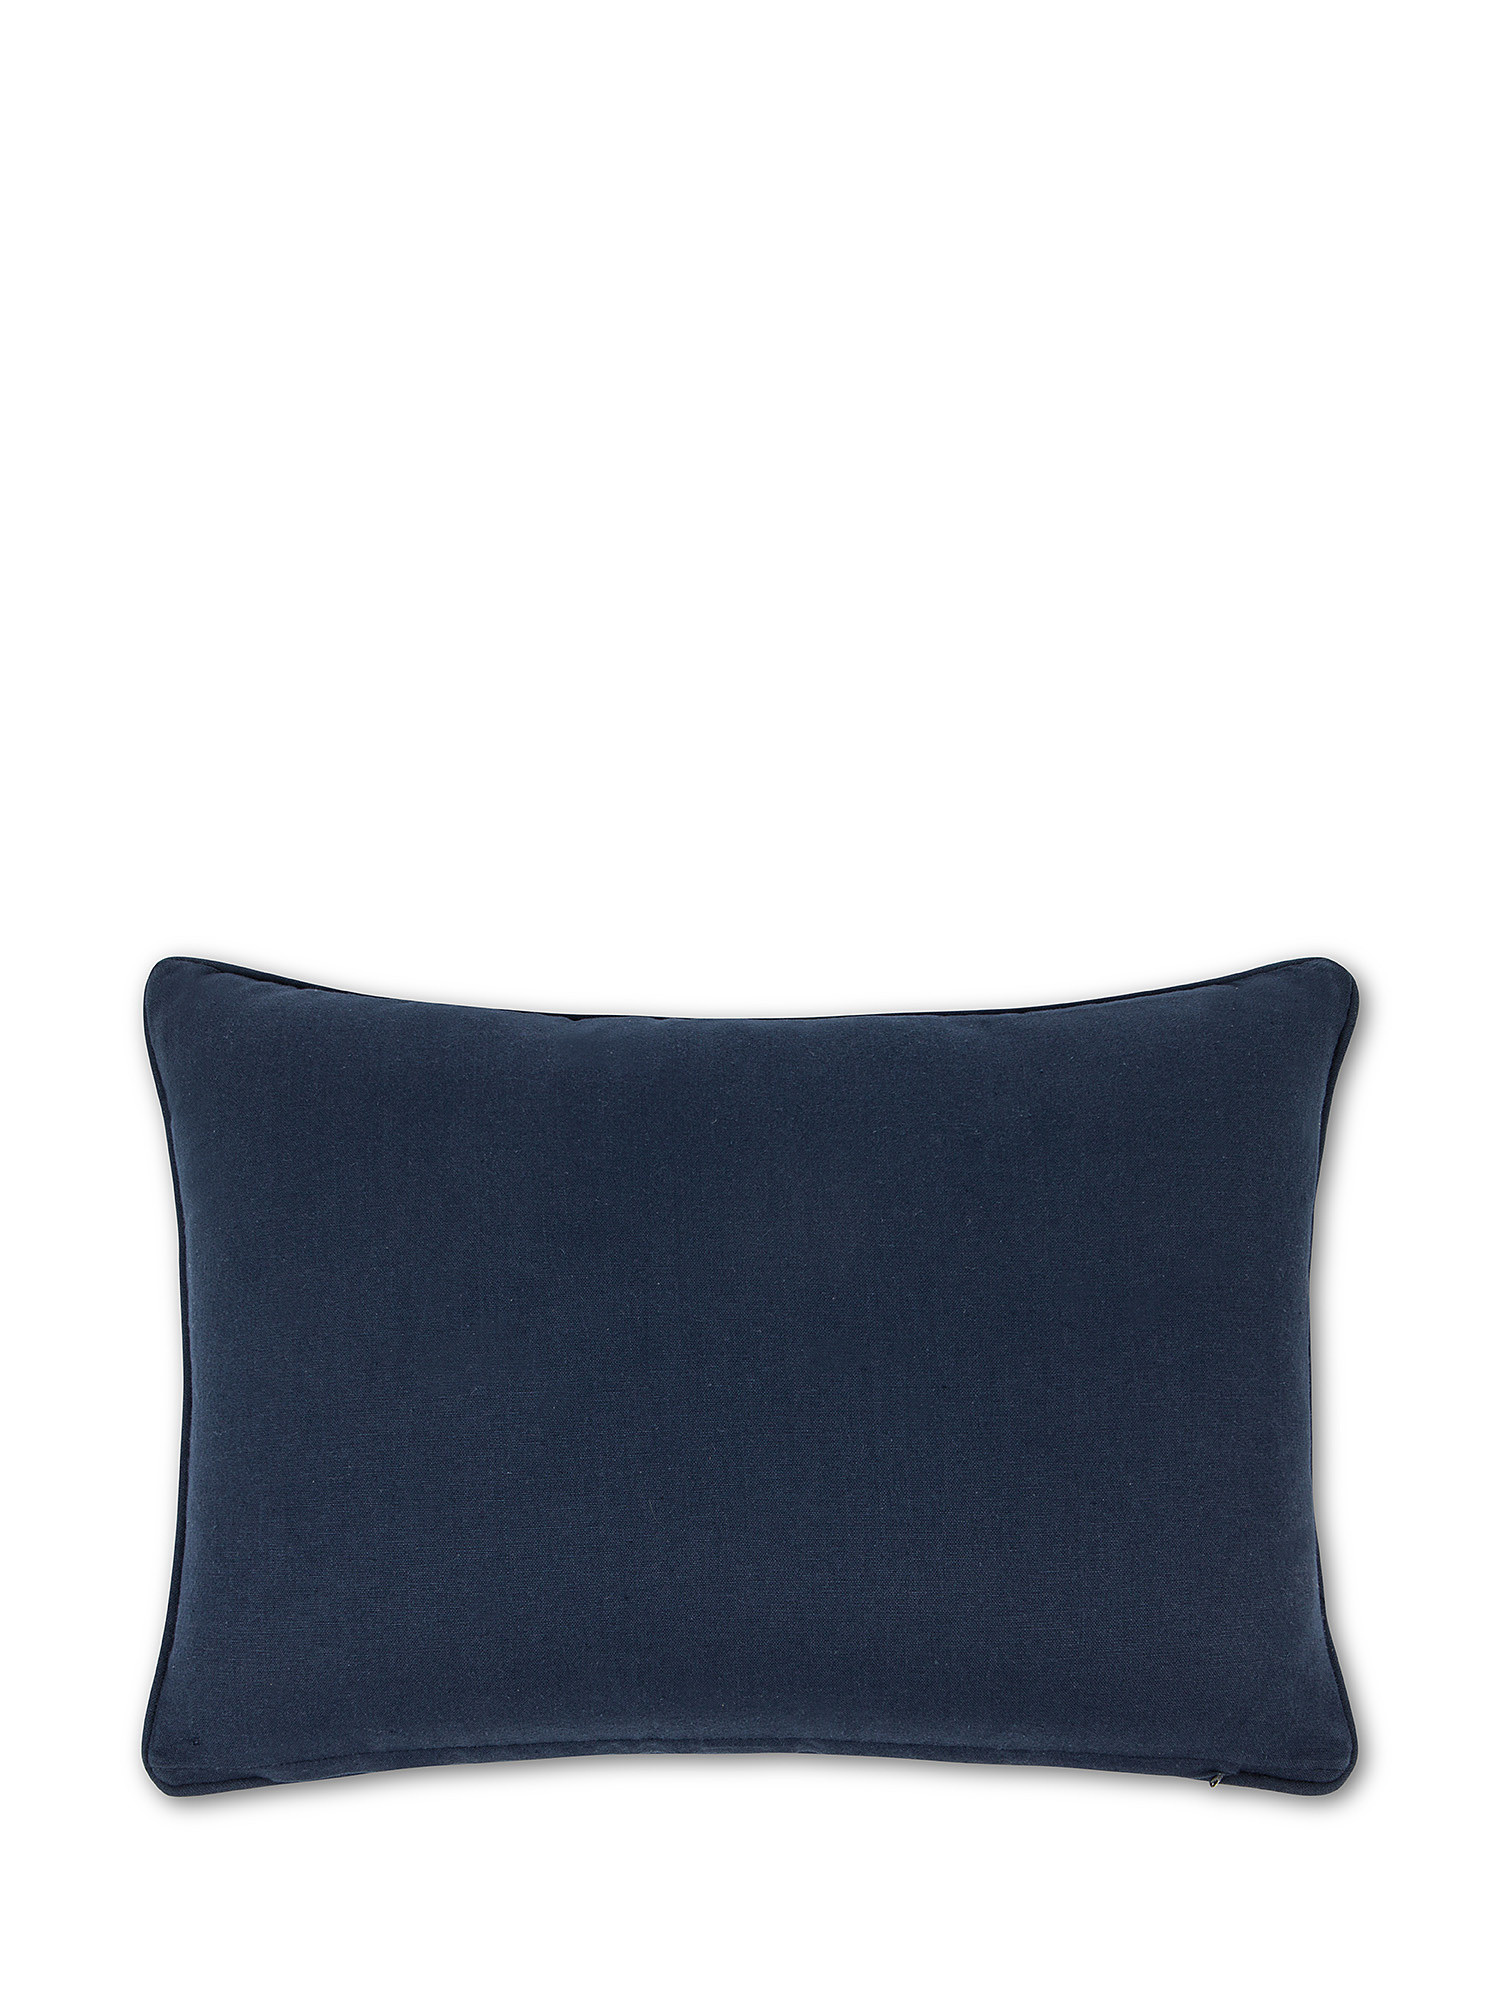 Cuscino 35X50 cm in cotone con ricami, Bianco/Blu, large image number 1